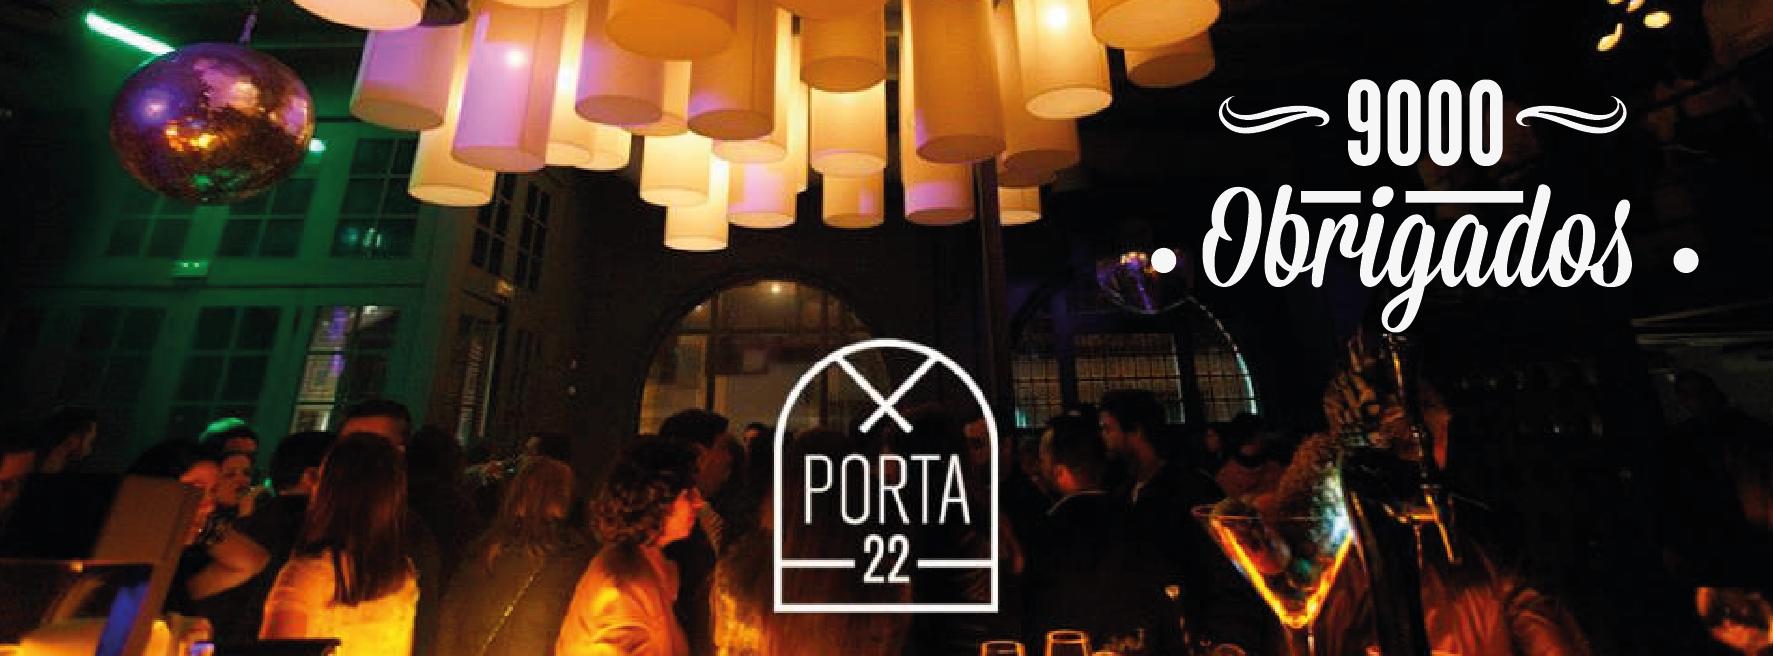 Porta 22 Club